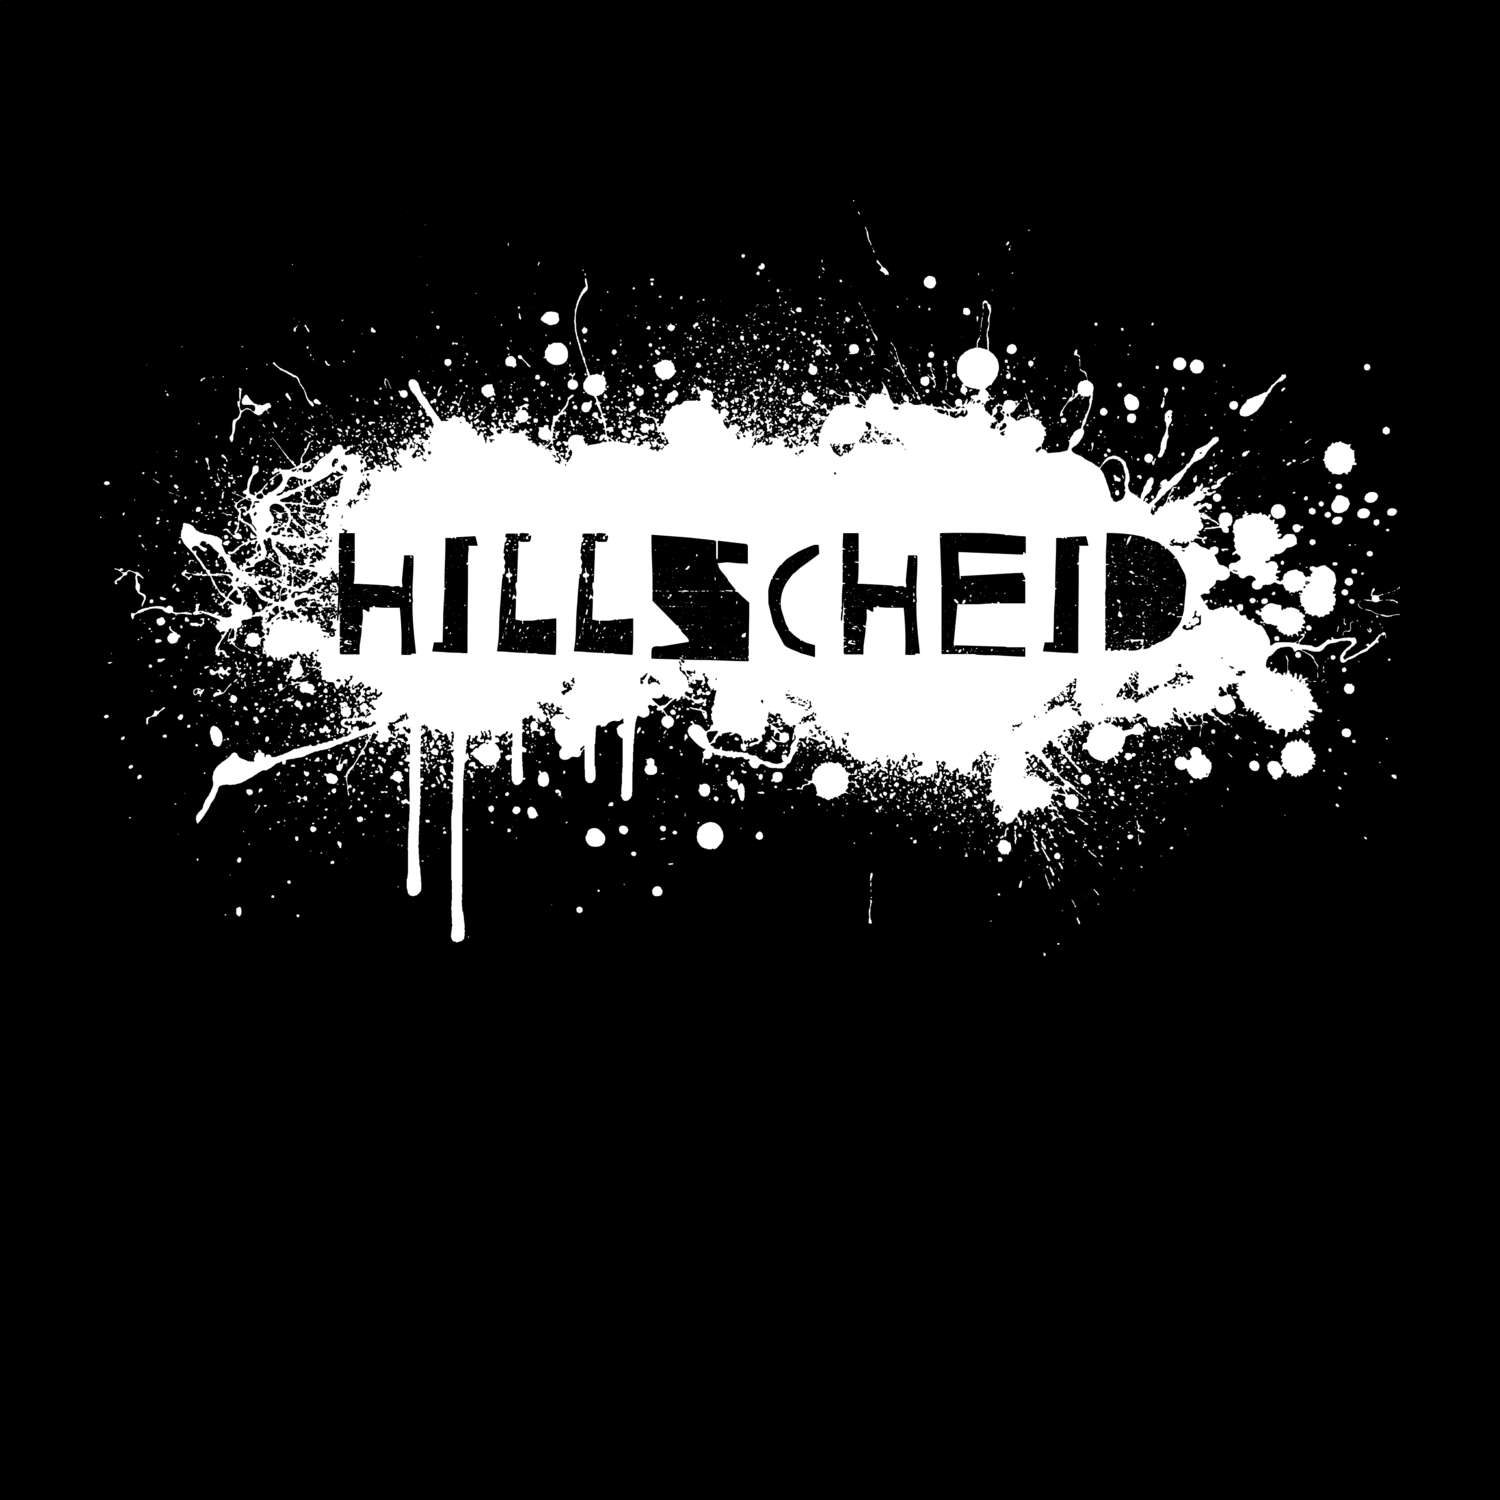 Hillscheid T-Shirt »Paint Splash Punk«